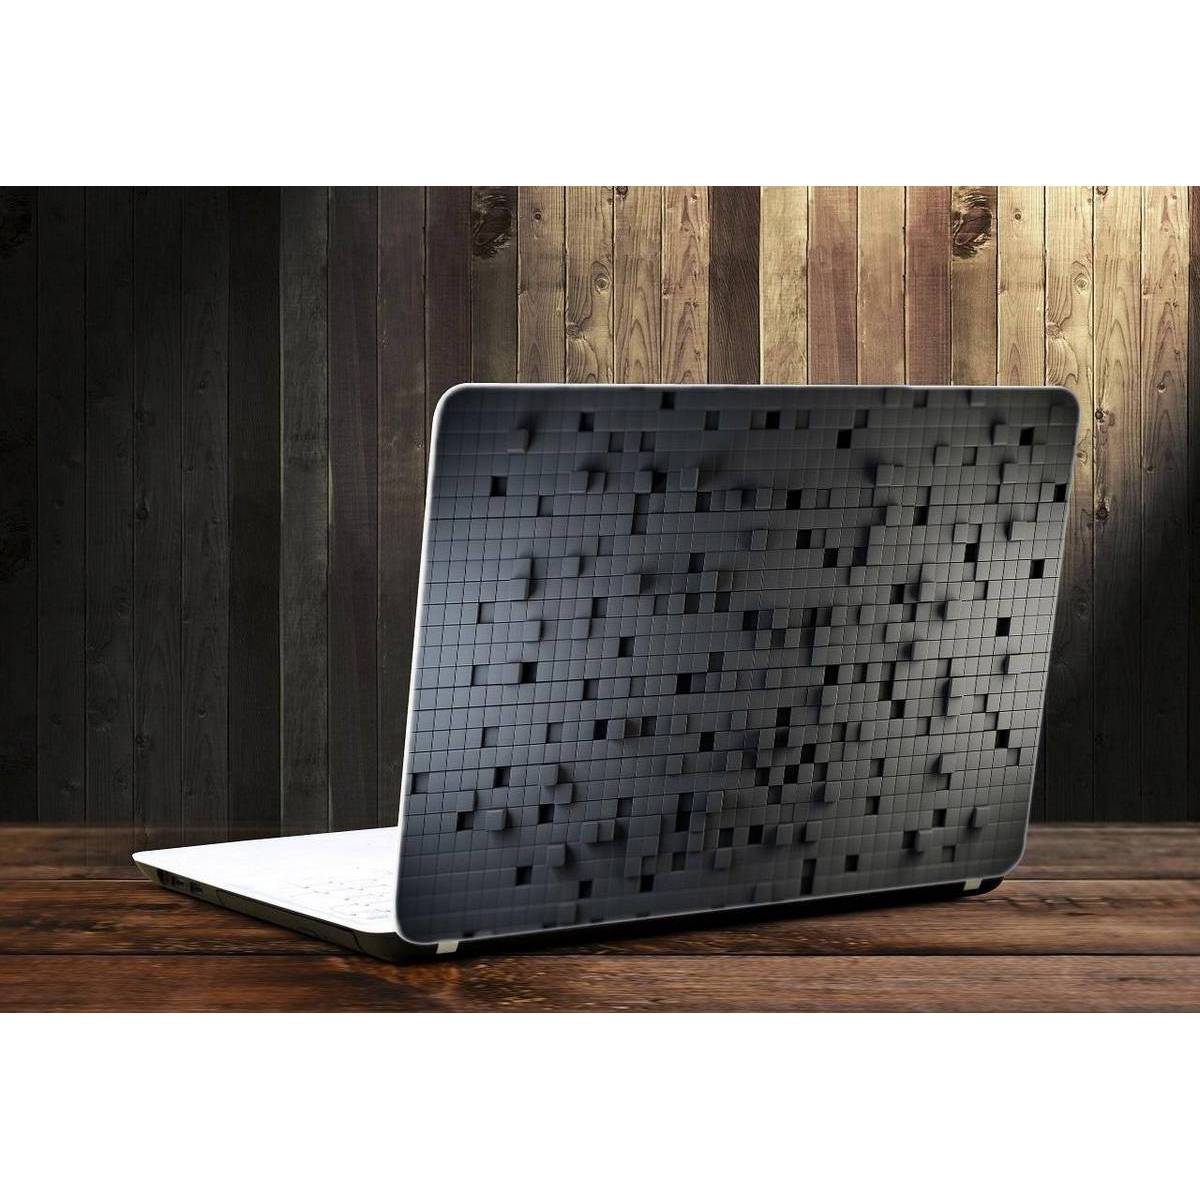 Laptop Skins Wallpapers - Wallpaper Cave